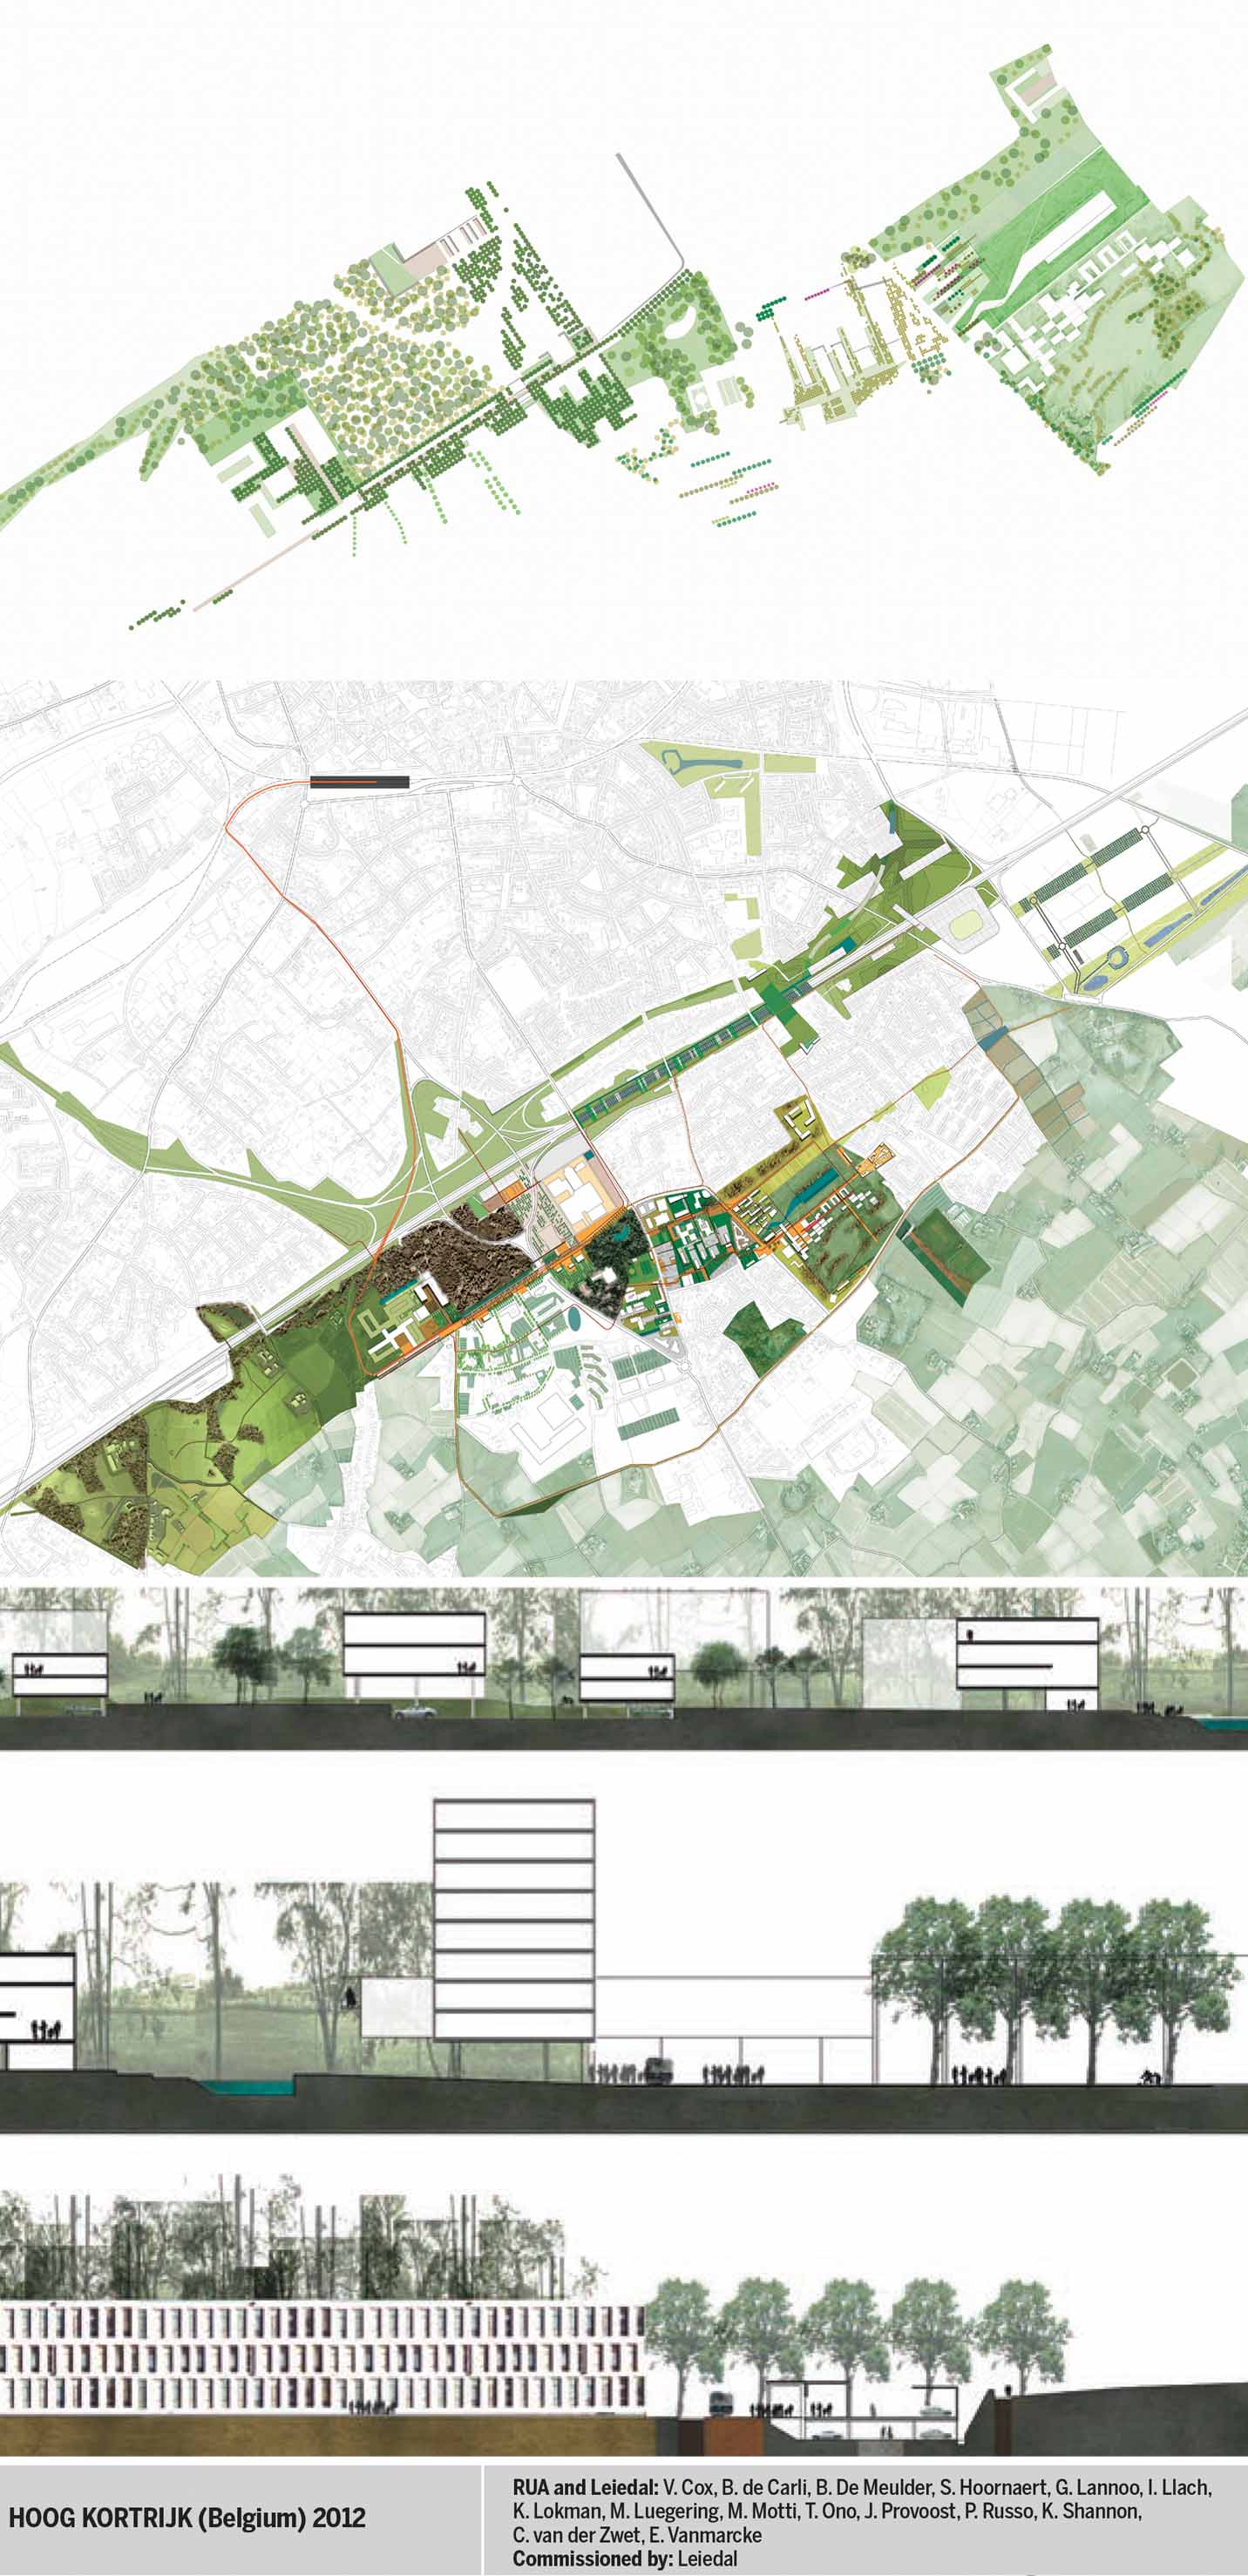 rua-projects-water-and-forest-urbanism-hoog-kortrijk-belgium-2012-leiedal-v-cox-bdecarli-bdemeulder-shoornaert-glannoo-illach-klokman-mluegering-mmotti-tono-jprovoost-prusso-kshannon-cvan-der-zwet-evanmarcke-commissioned-leiedal